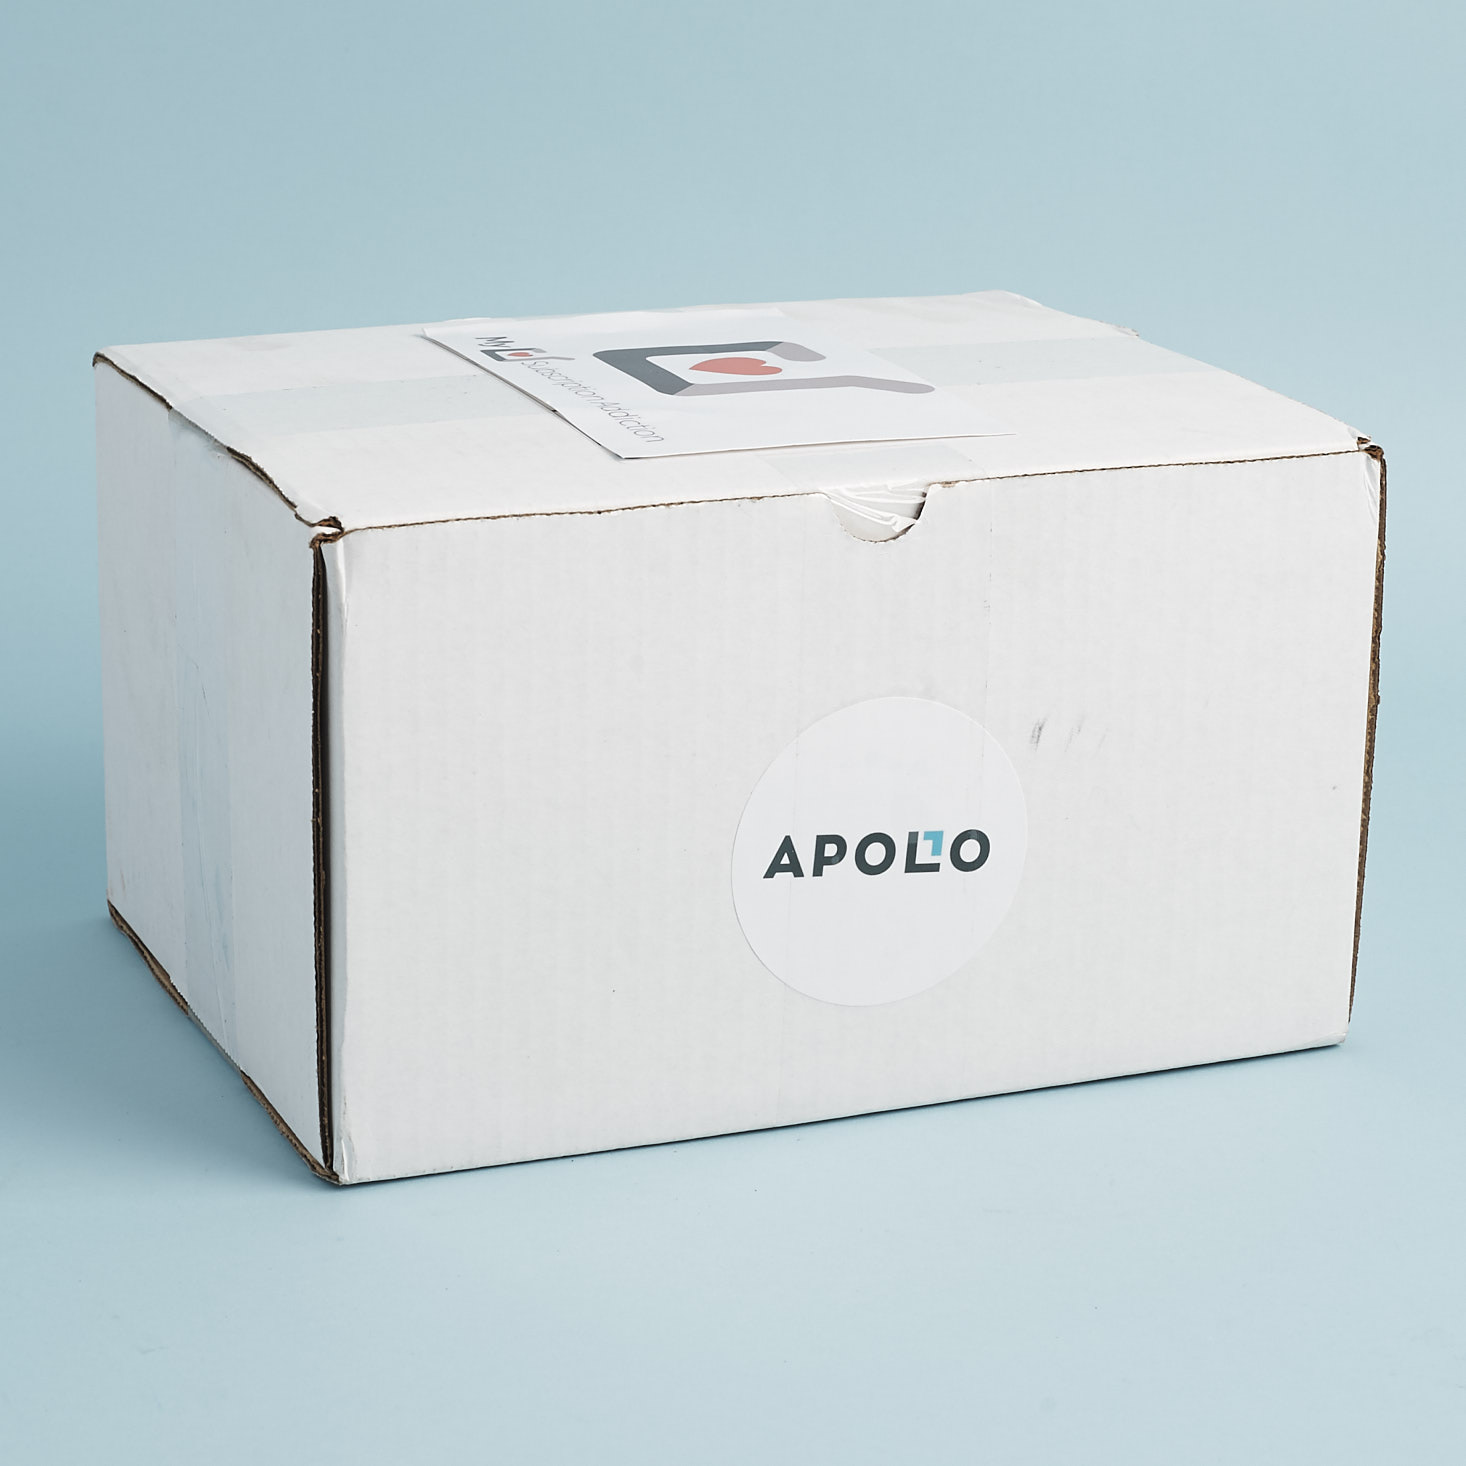 Apollo Surprise Box Review + Coupon – February 2018